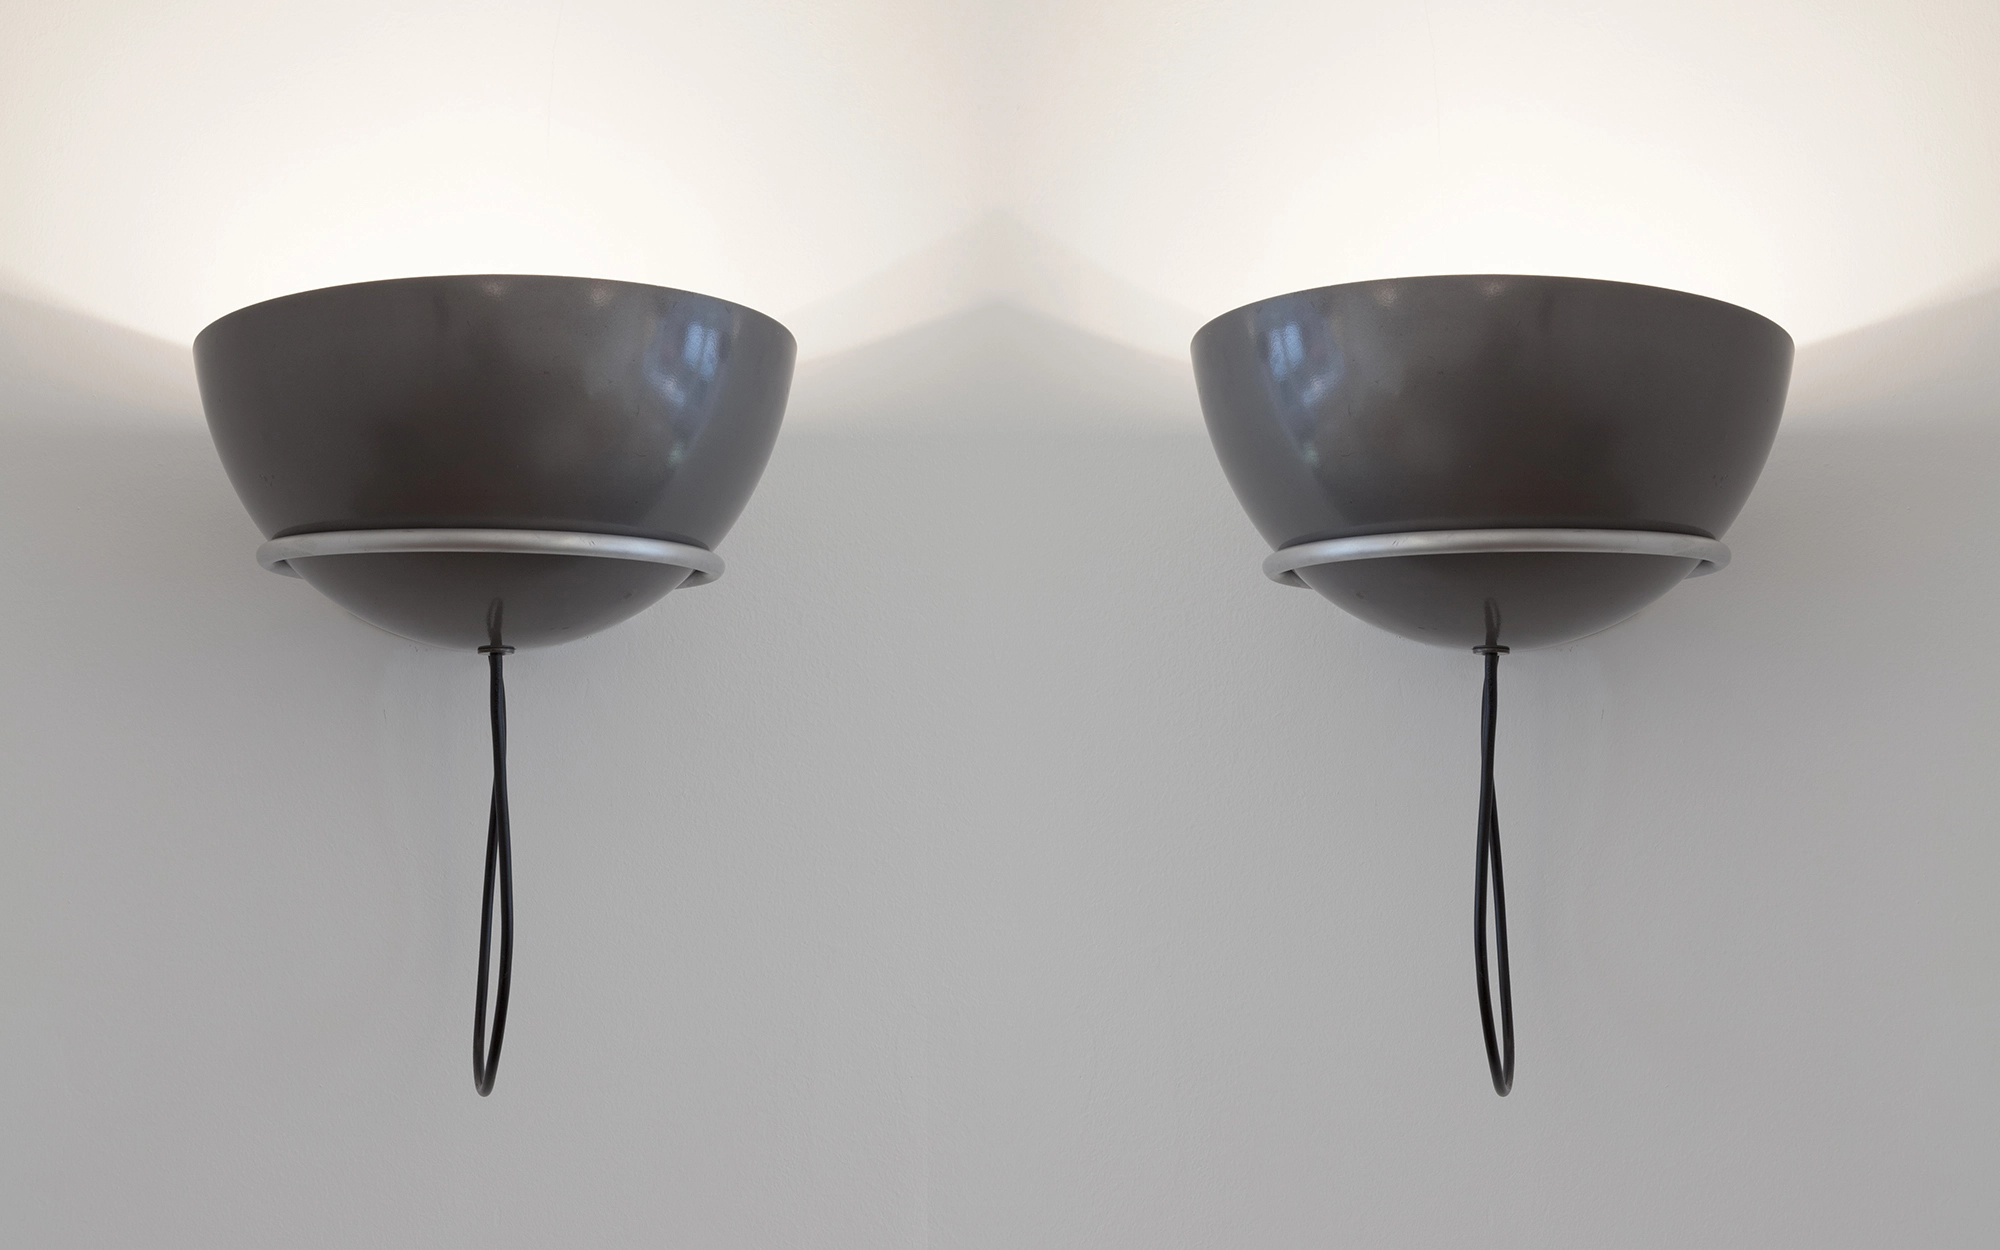 2/2 - Gino Sarfatti - Wall light - Galerie kreo